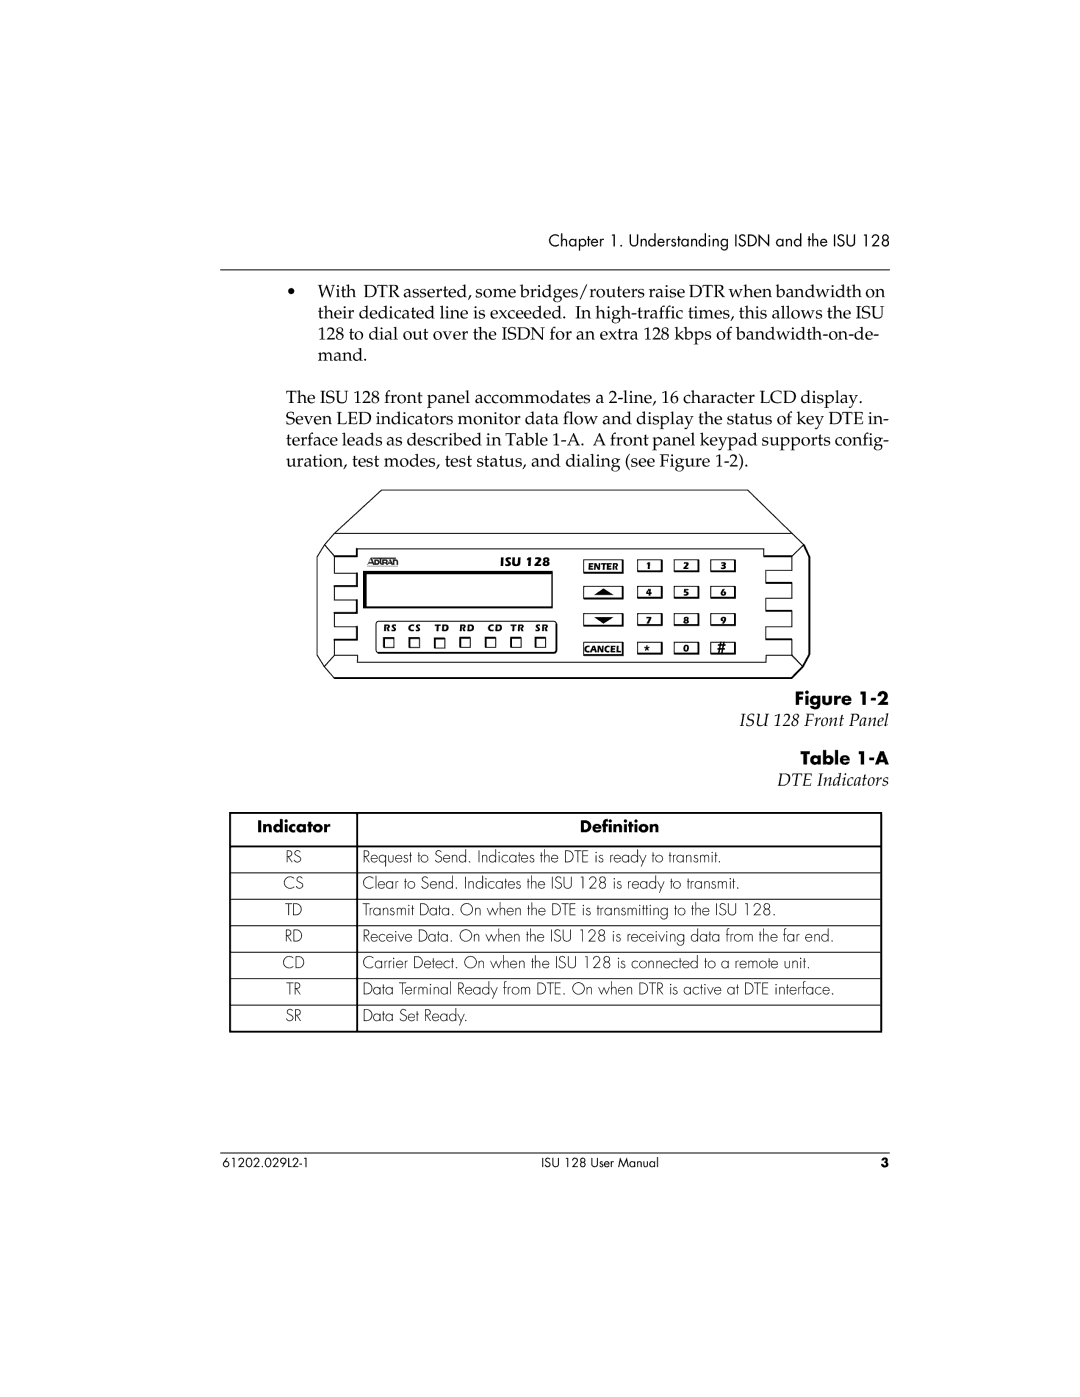 ADTRAN user manual ISU 128 Front Panel DTE Indicators, Indicator Deﬁnition 